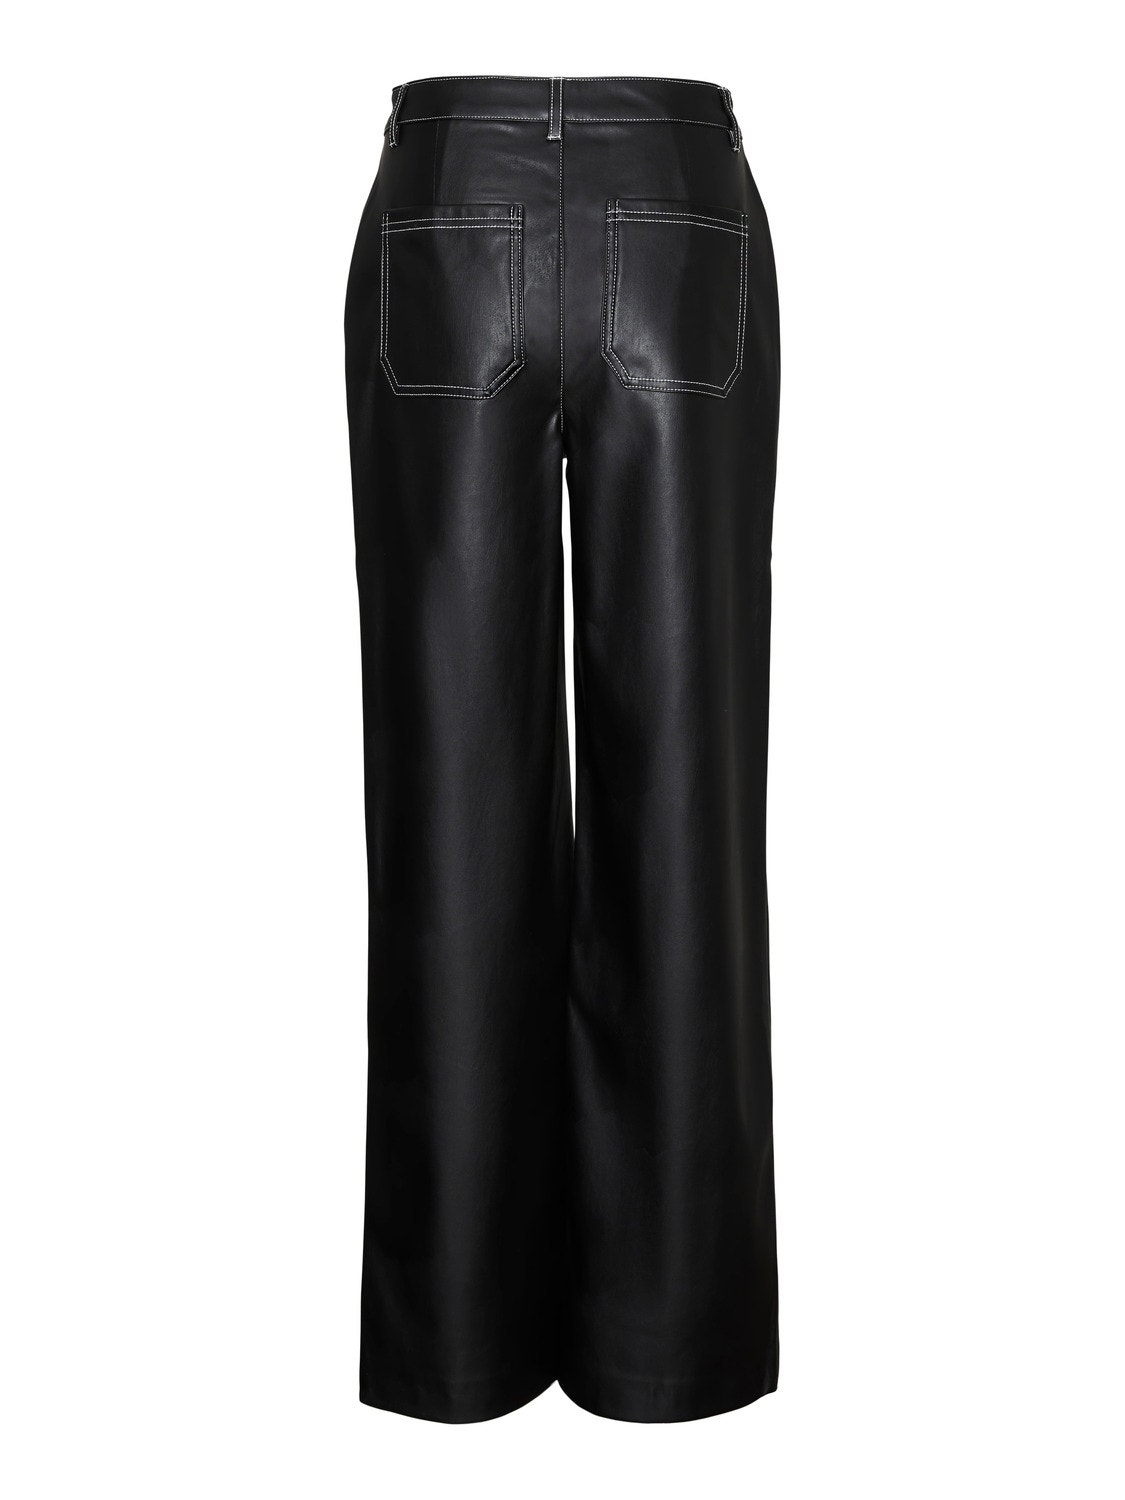 Vero Moda VMDAISY High rise Trousers -Black - 10297414